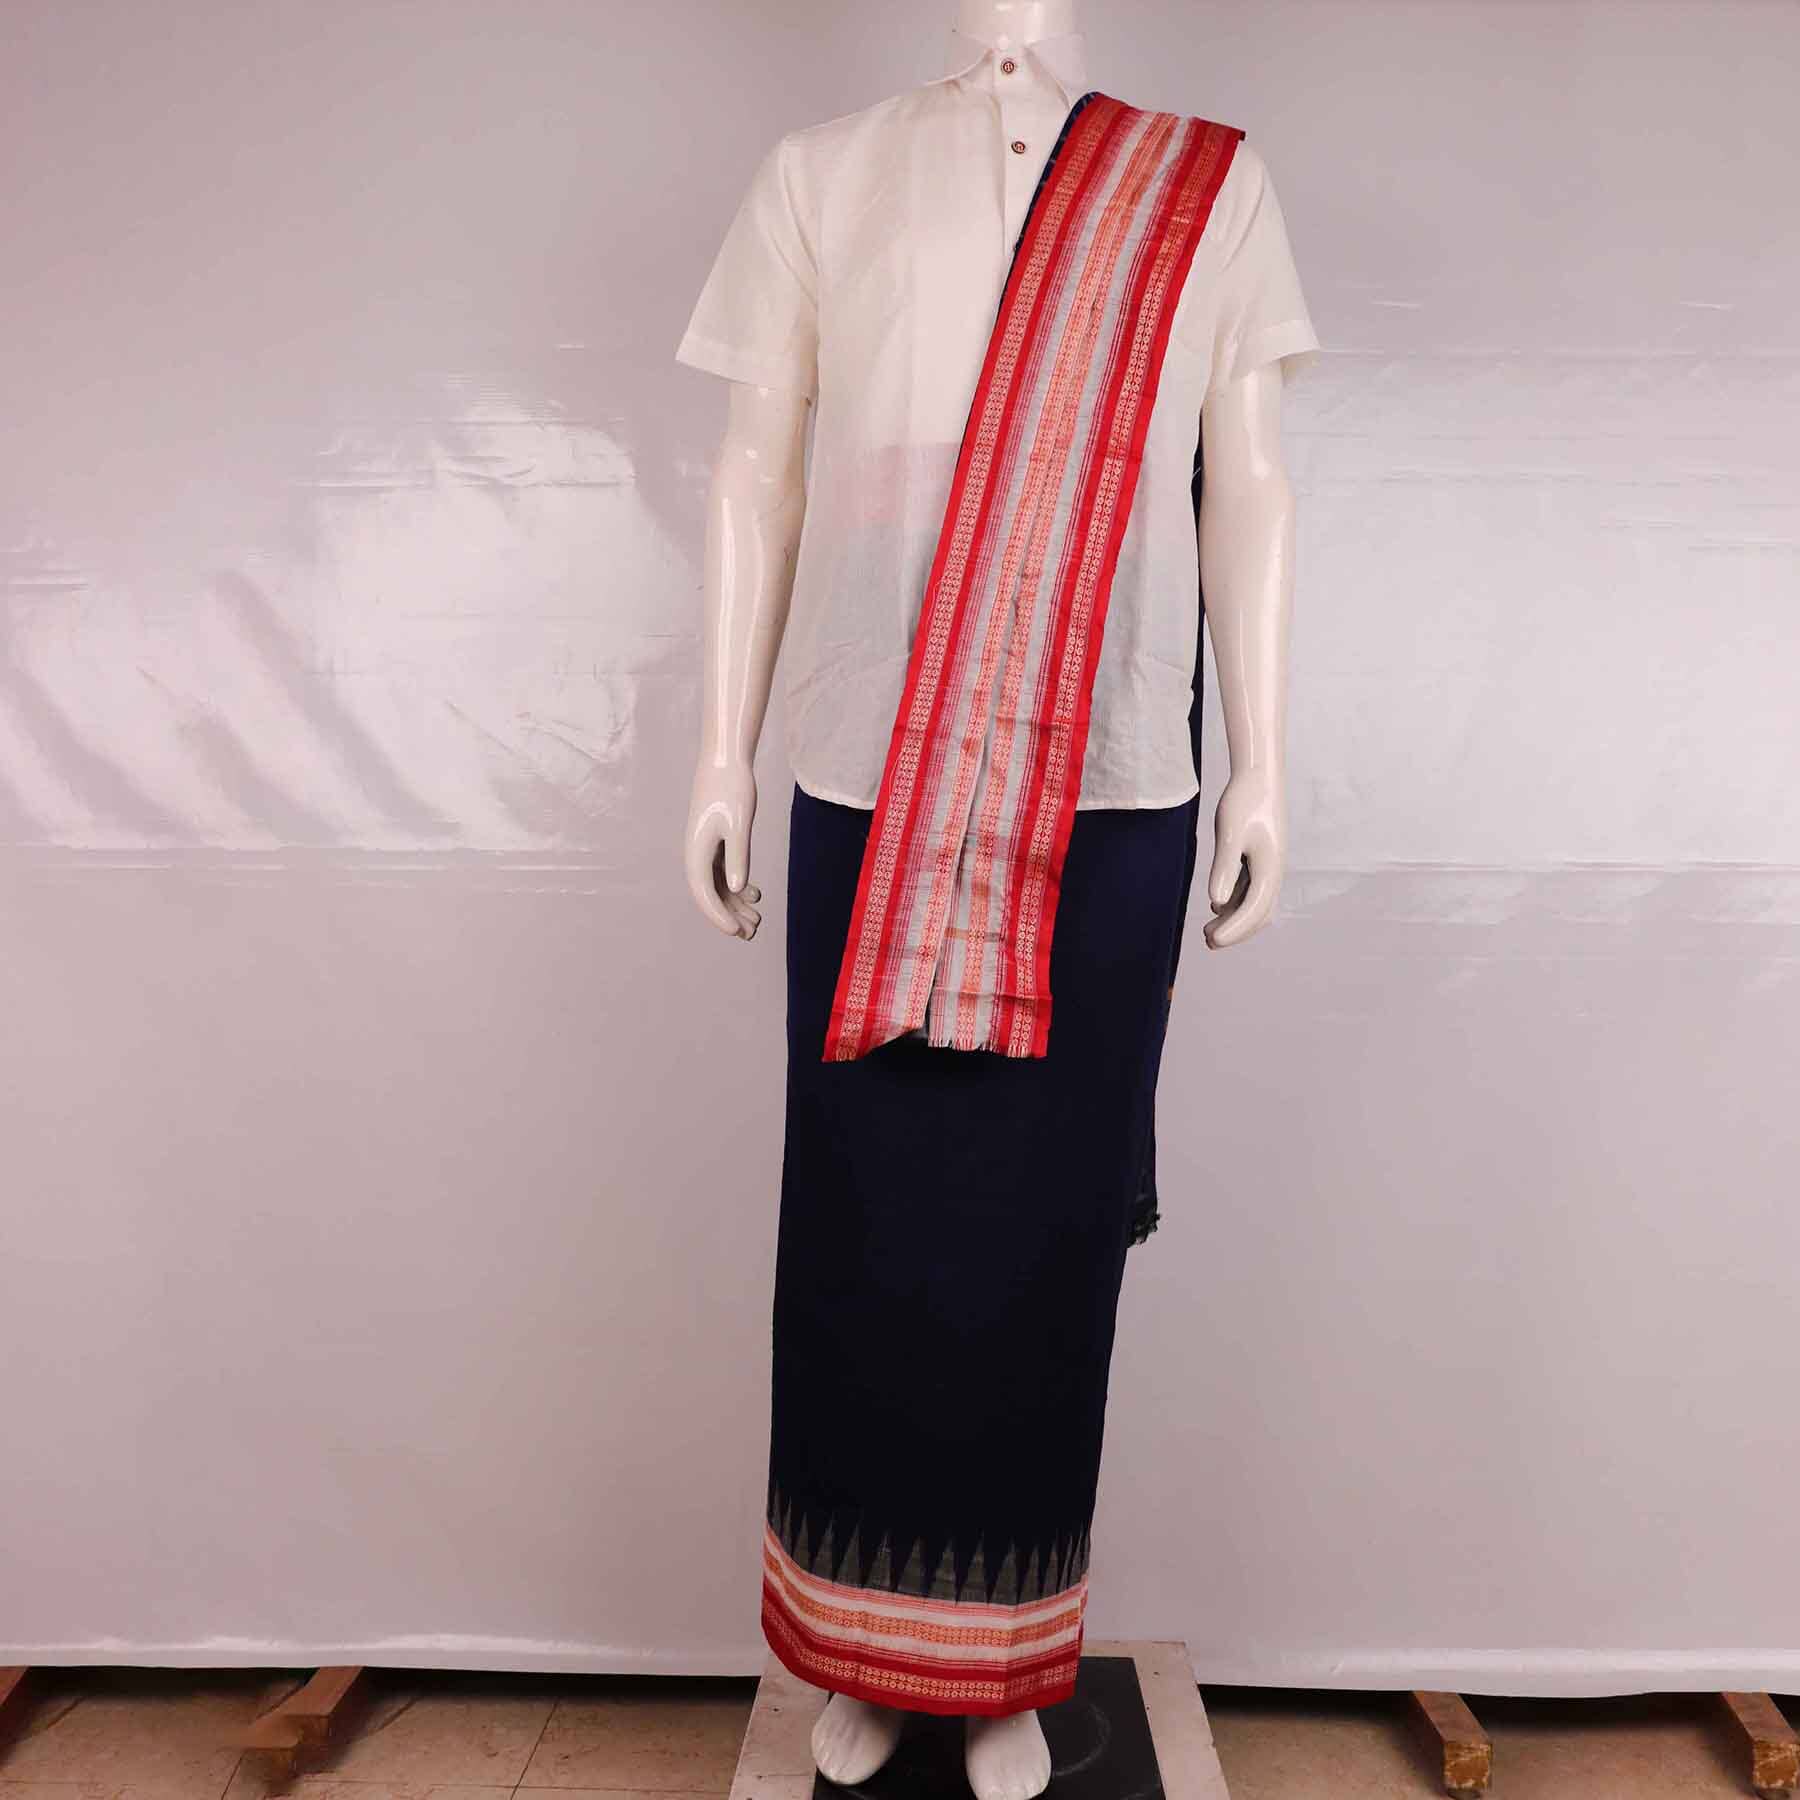 Nagas Traditional Dresses